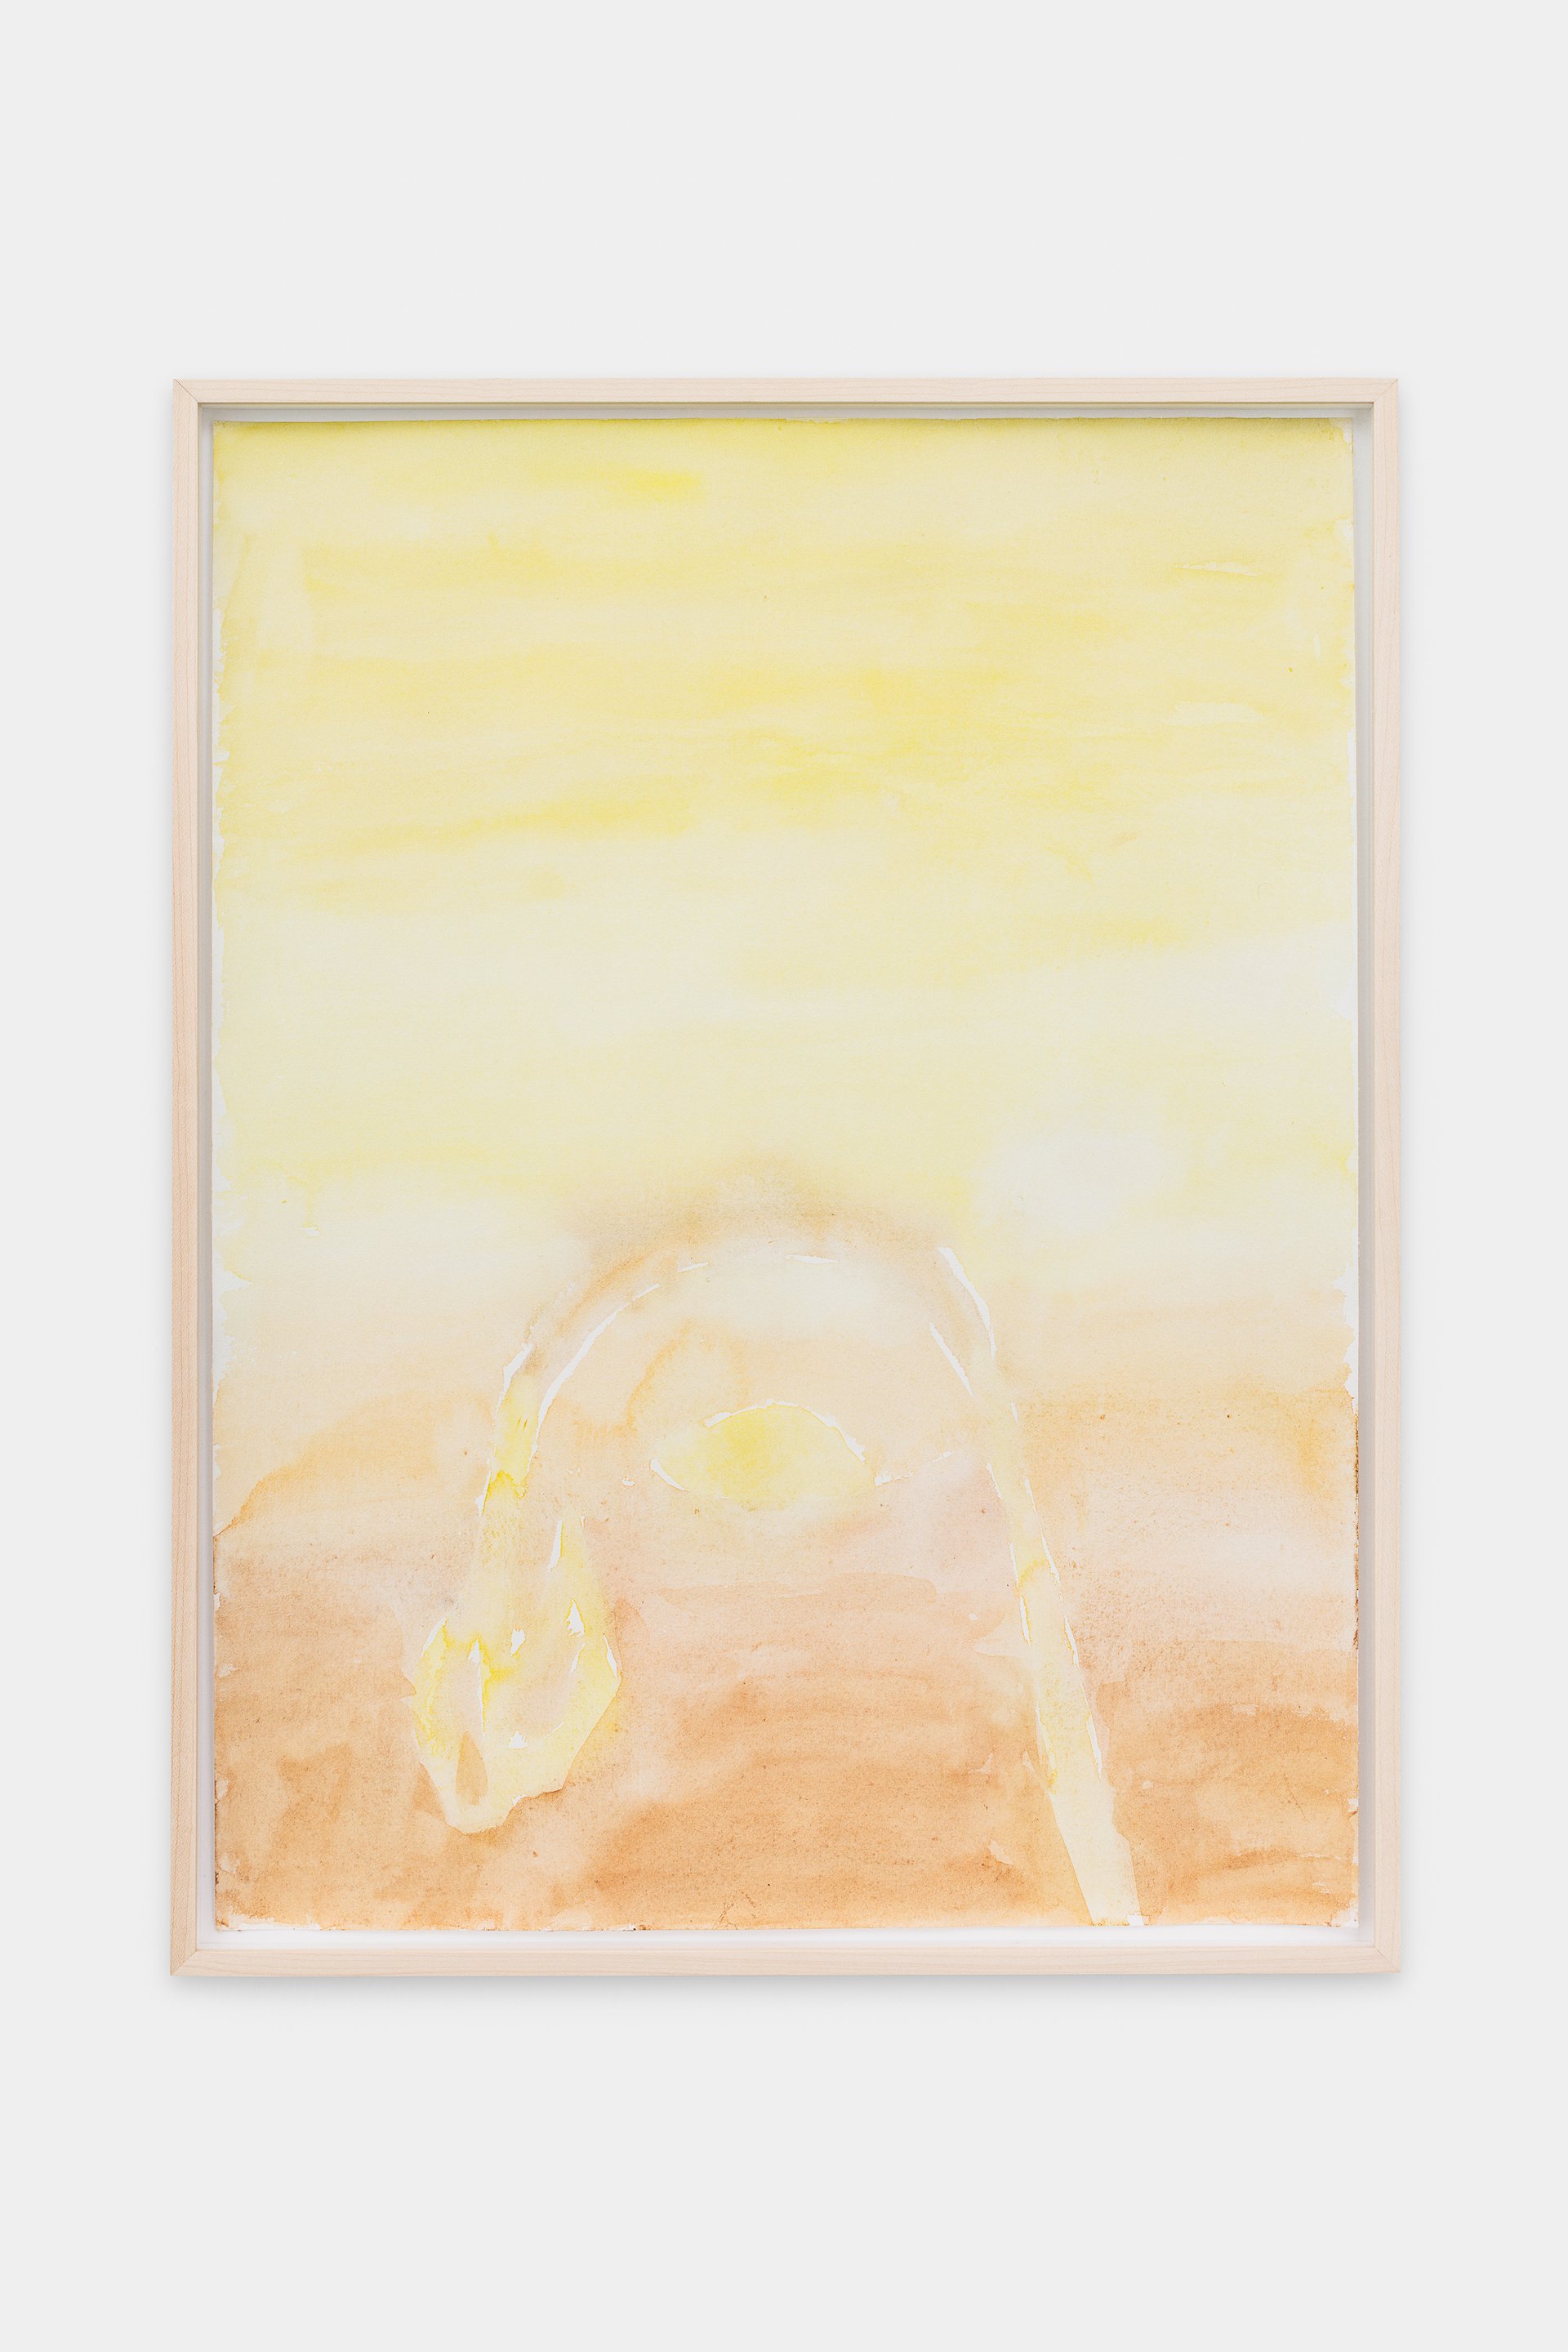 Lisa Holzerobjet a (sundown), 2023Watercolor on paper50 x 38 cm